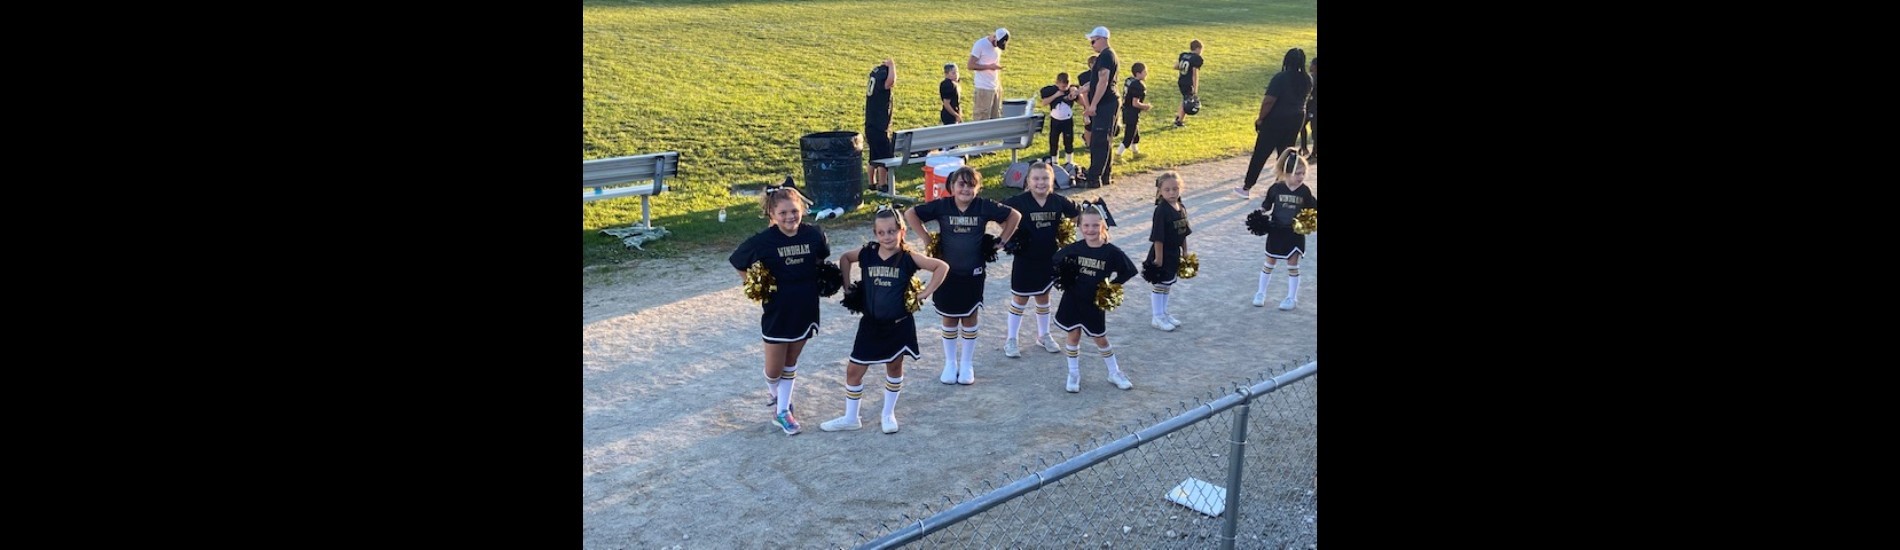 Elementary football cheerleaders showing team spirit!